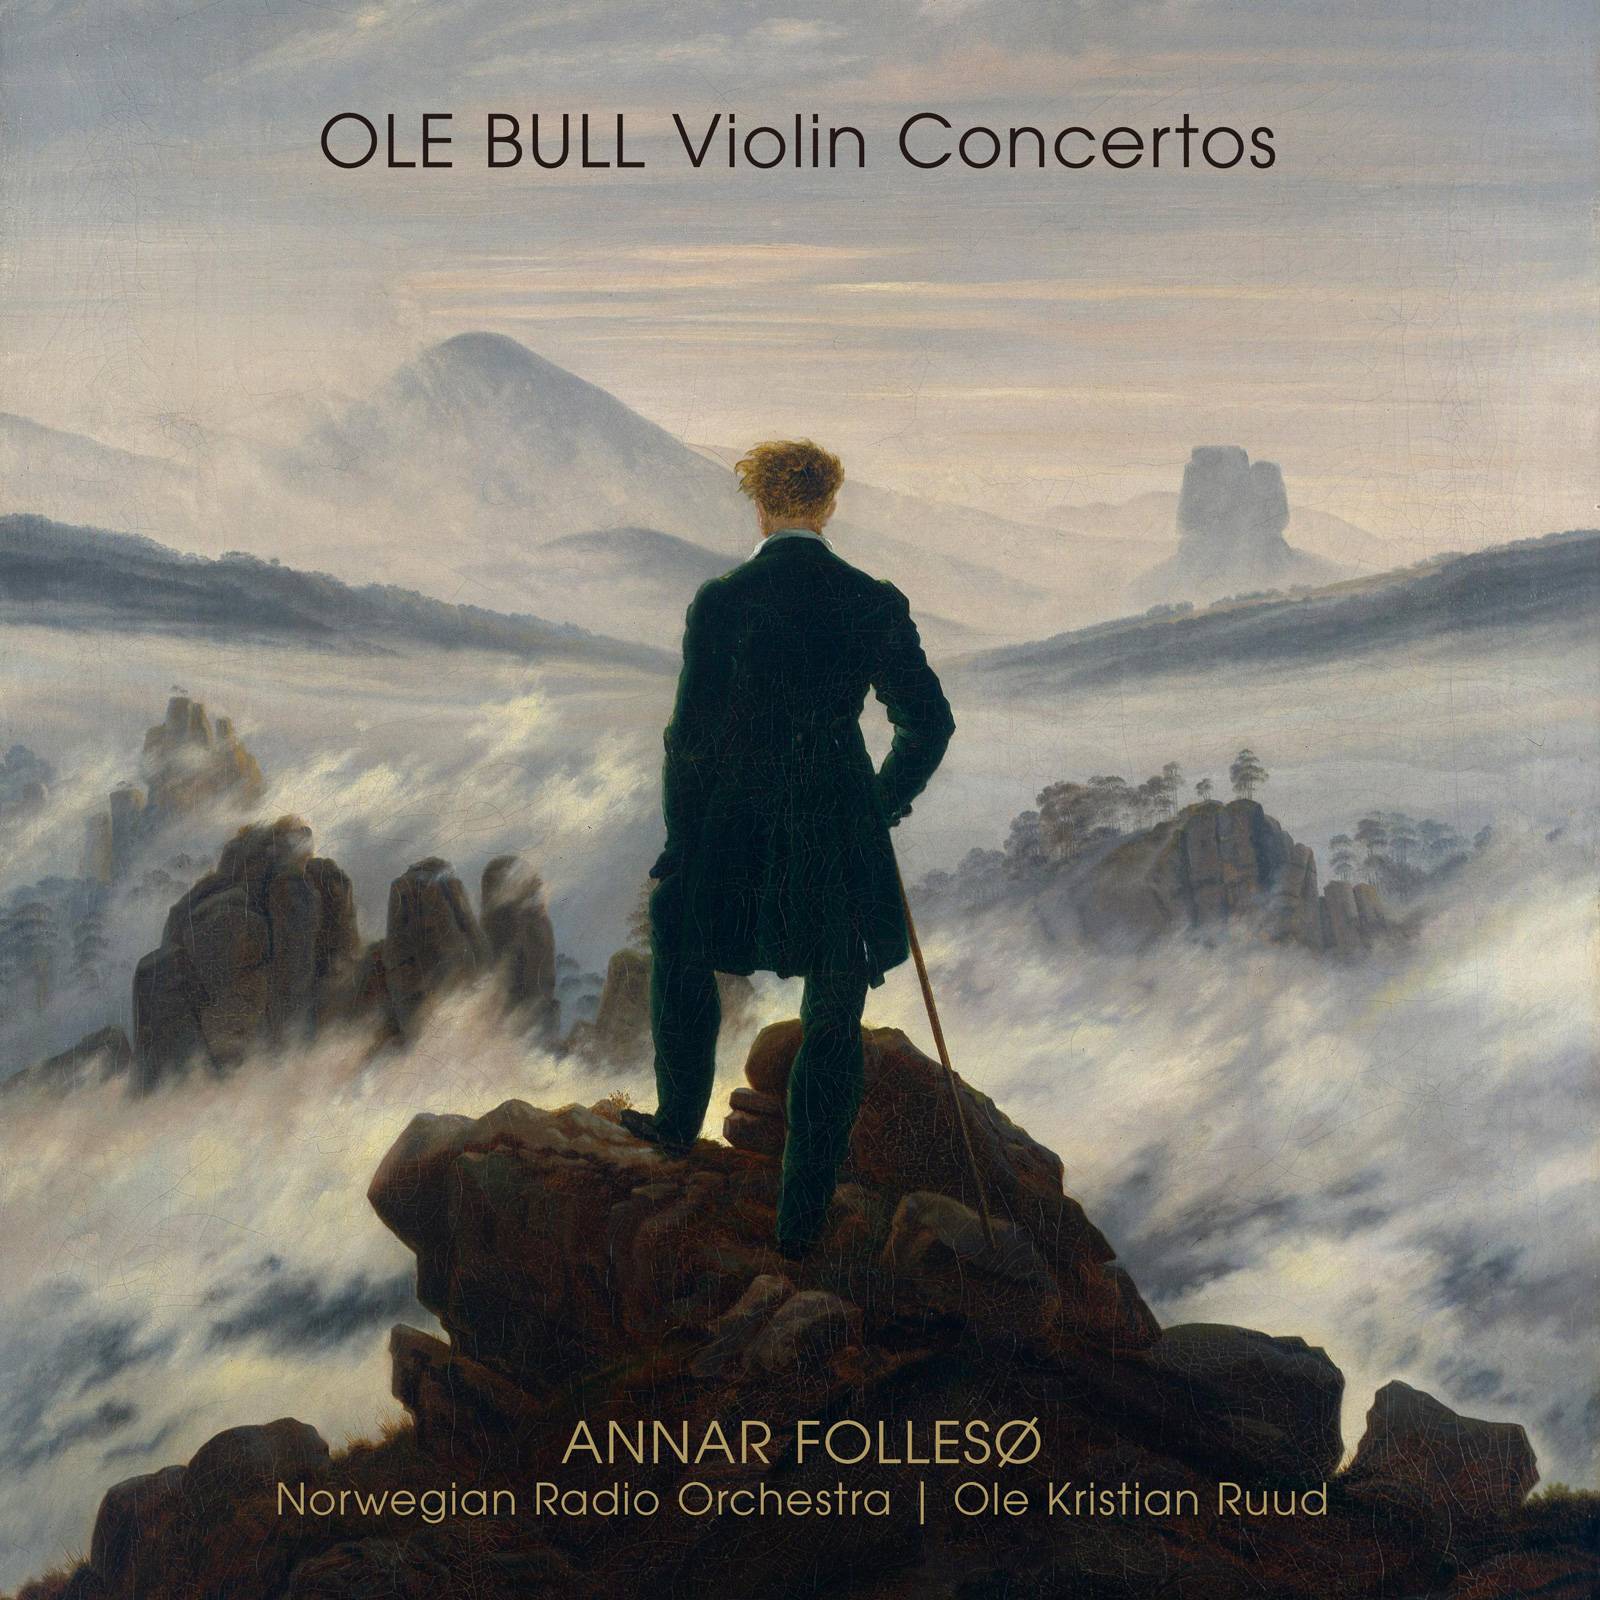 Annar Folleso, Norwegian Radio Orchestra, Ole Kristian Ruud - Ole Bull: Violin Concertos (2010) MCH SACD ISO + FLAC 24bit/96kHz